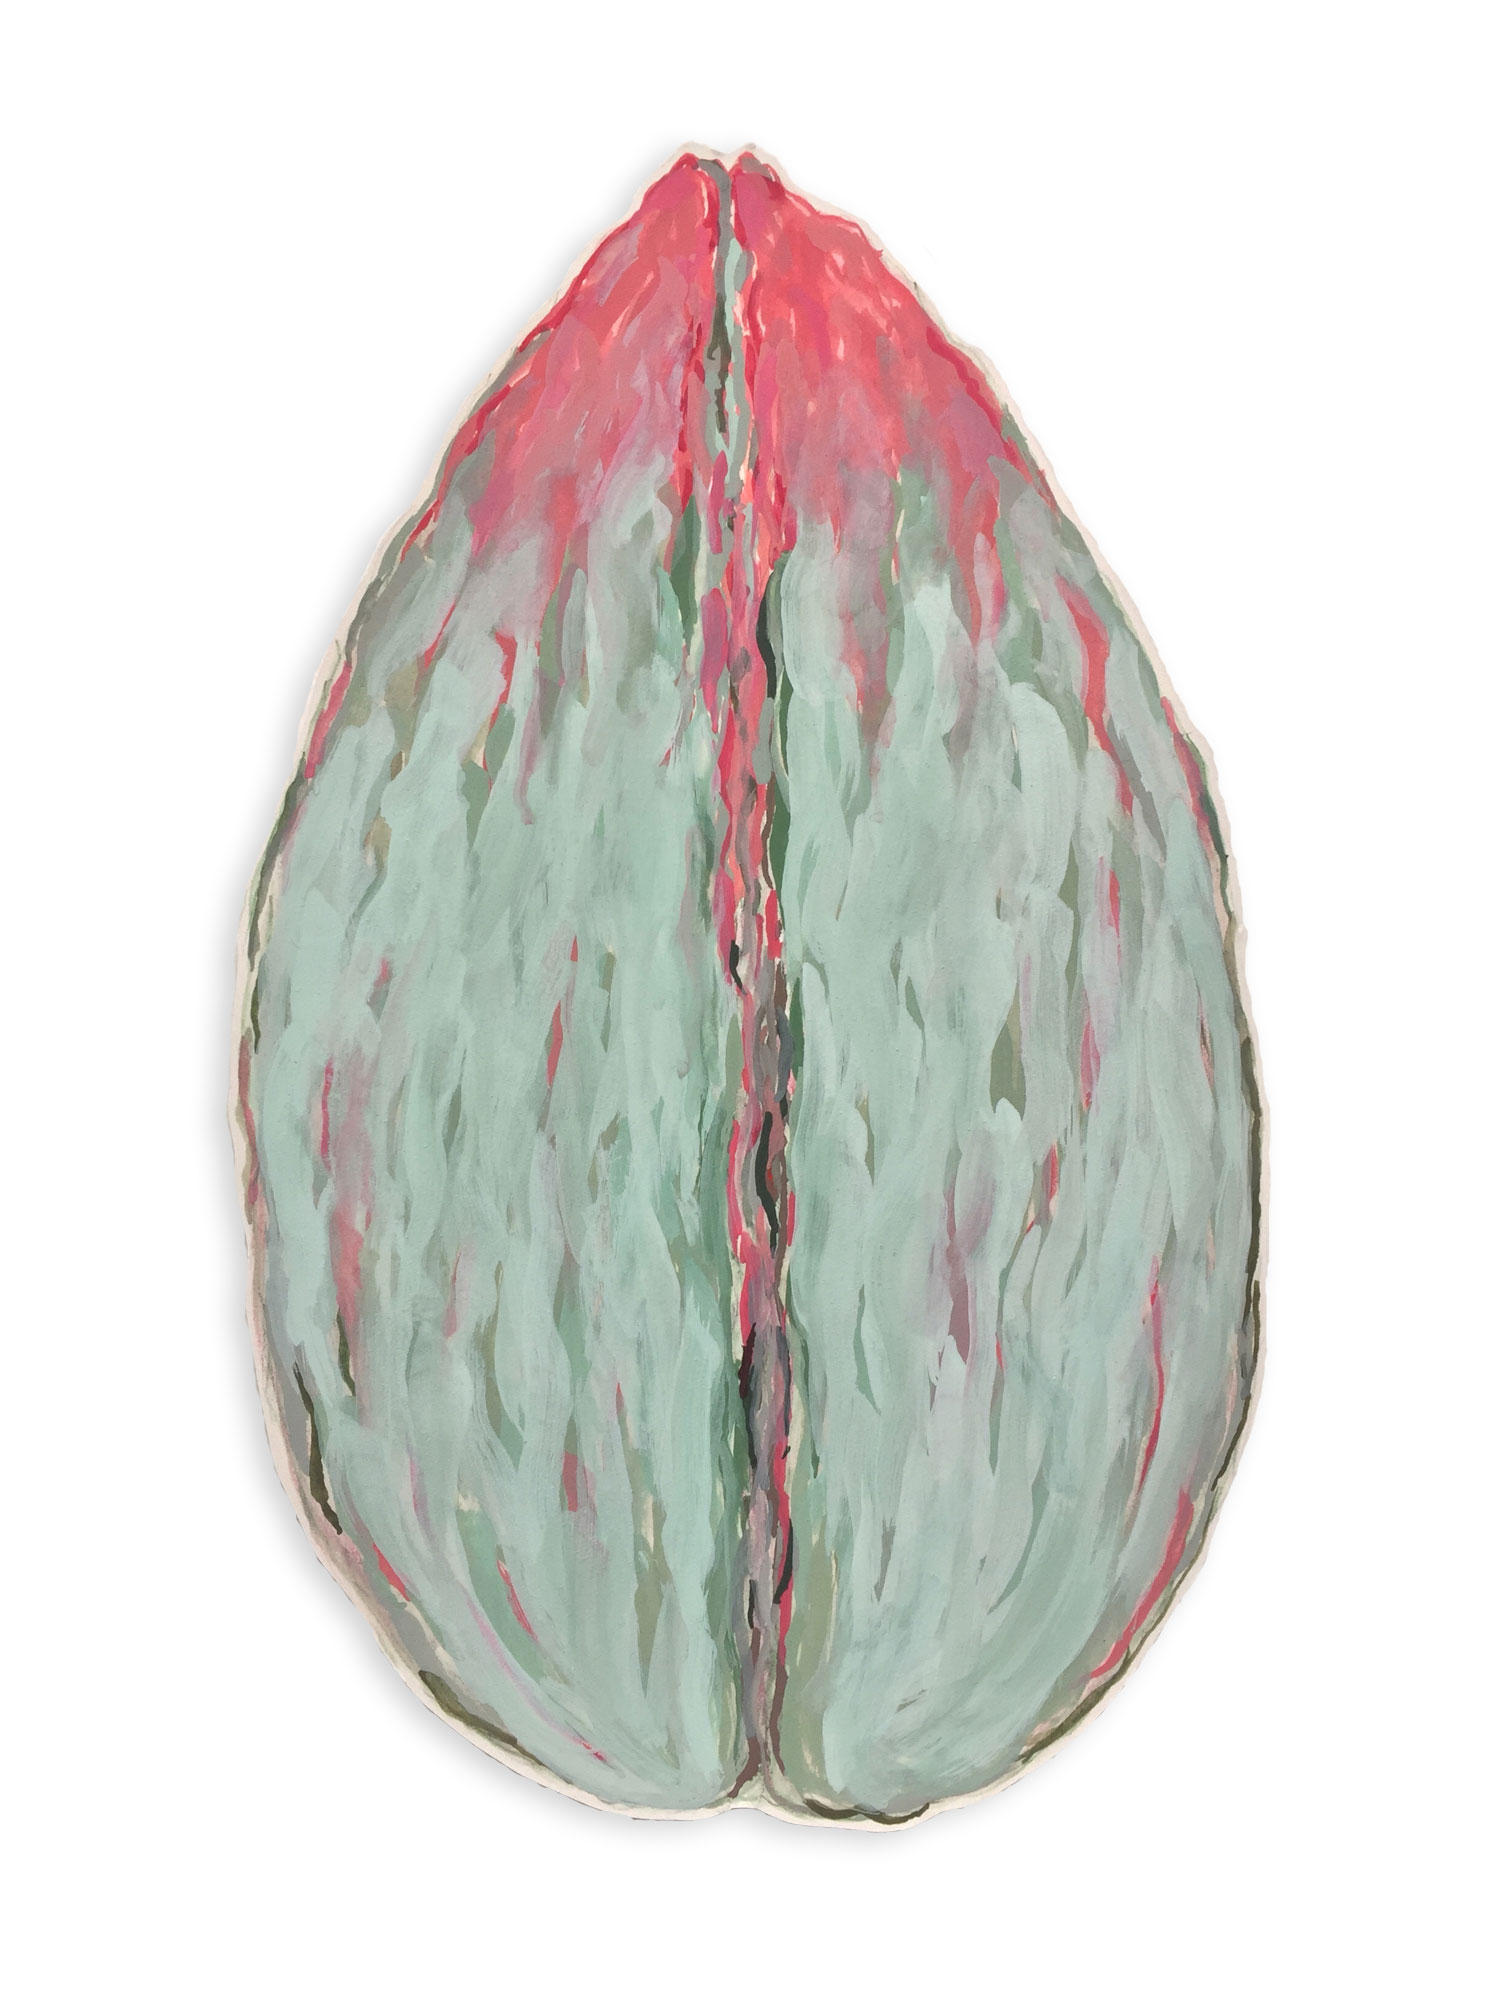 Untitled (Winter Tulip)